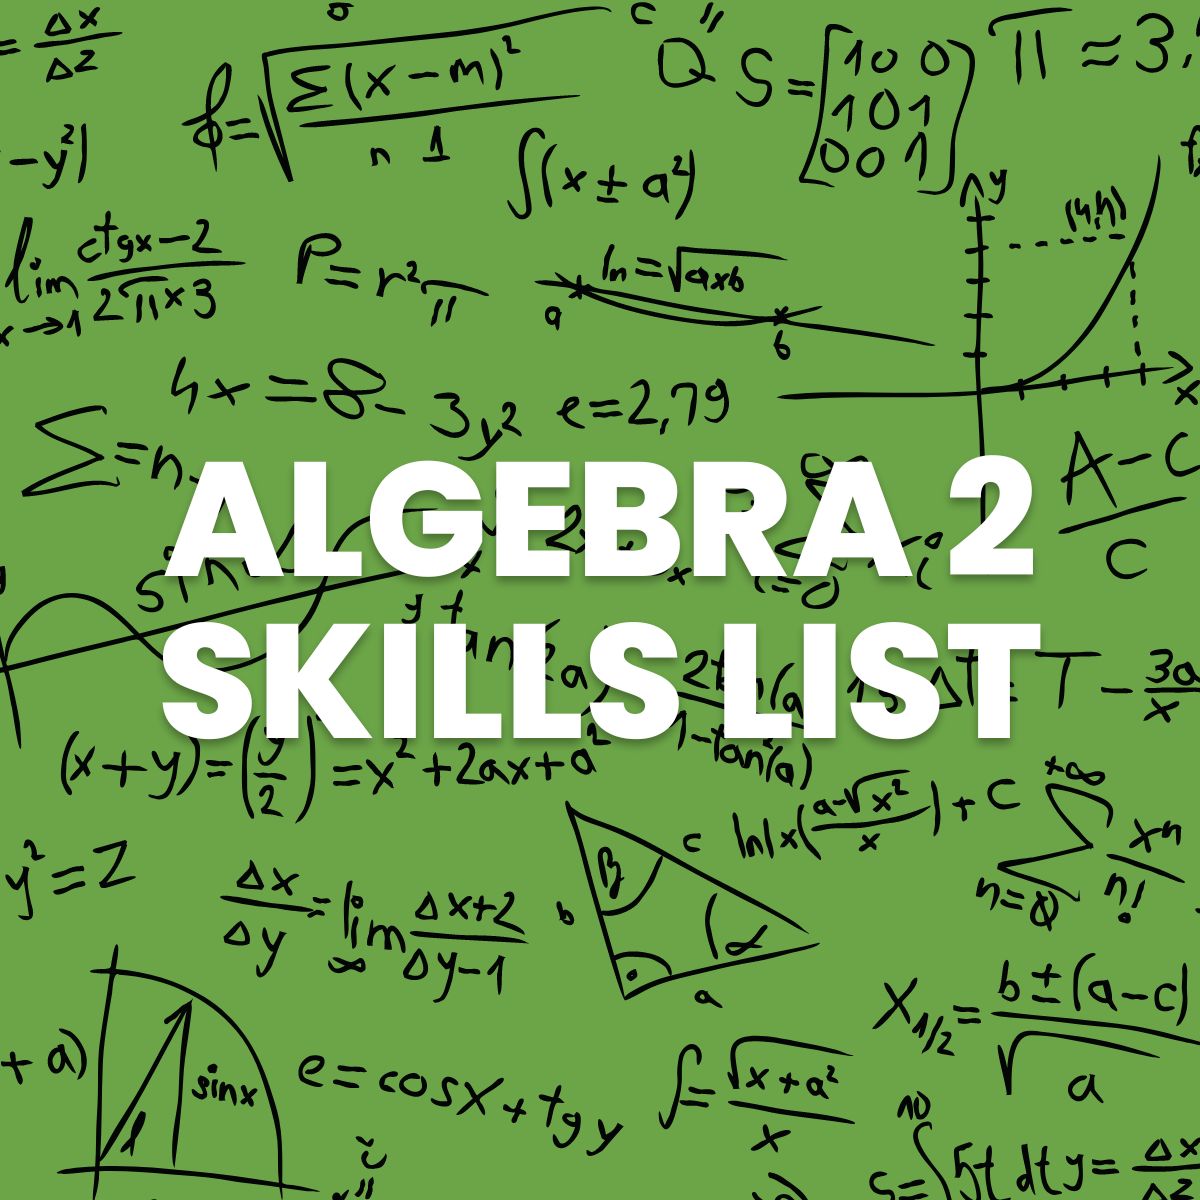 Algebra 2 Skills Checklist for Standards Based Grading Math = Love